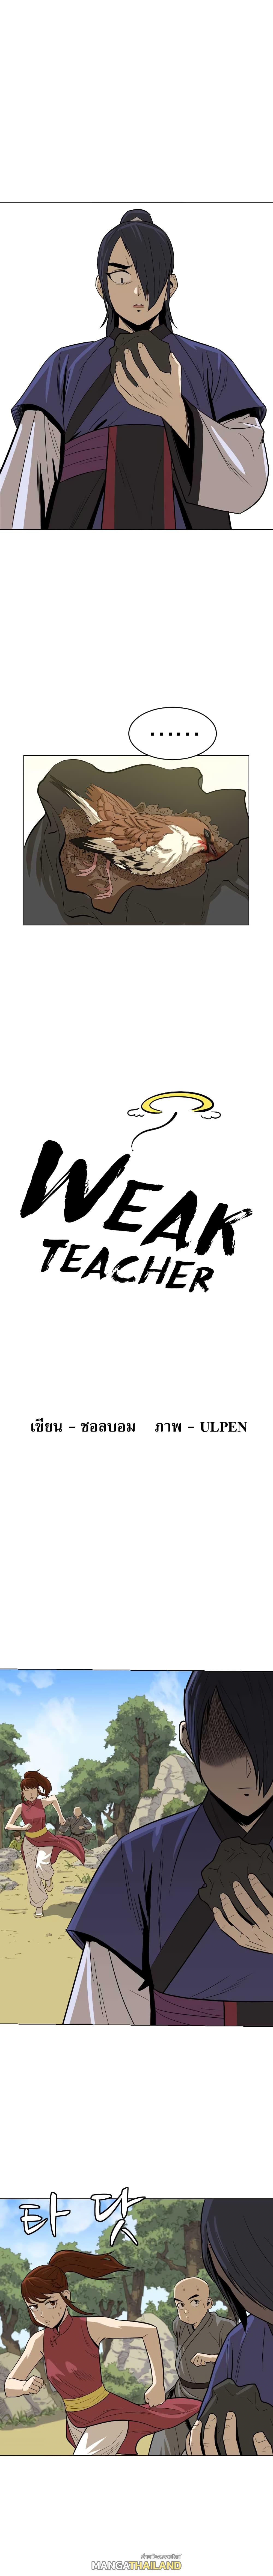 Weak-Teacher--6-2.jpg